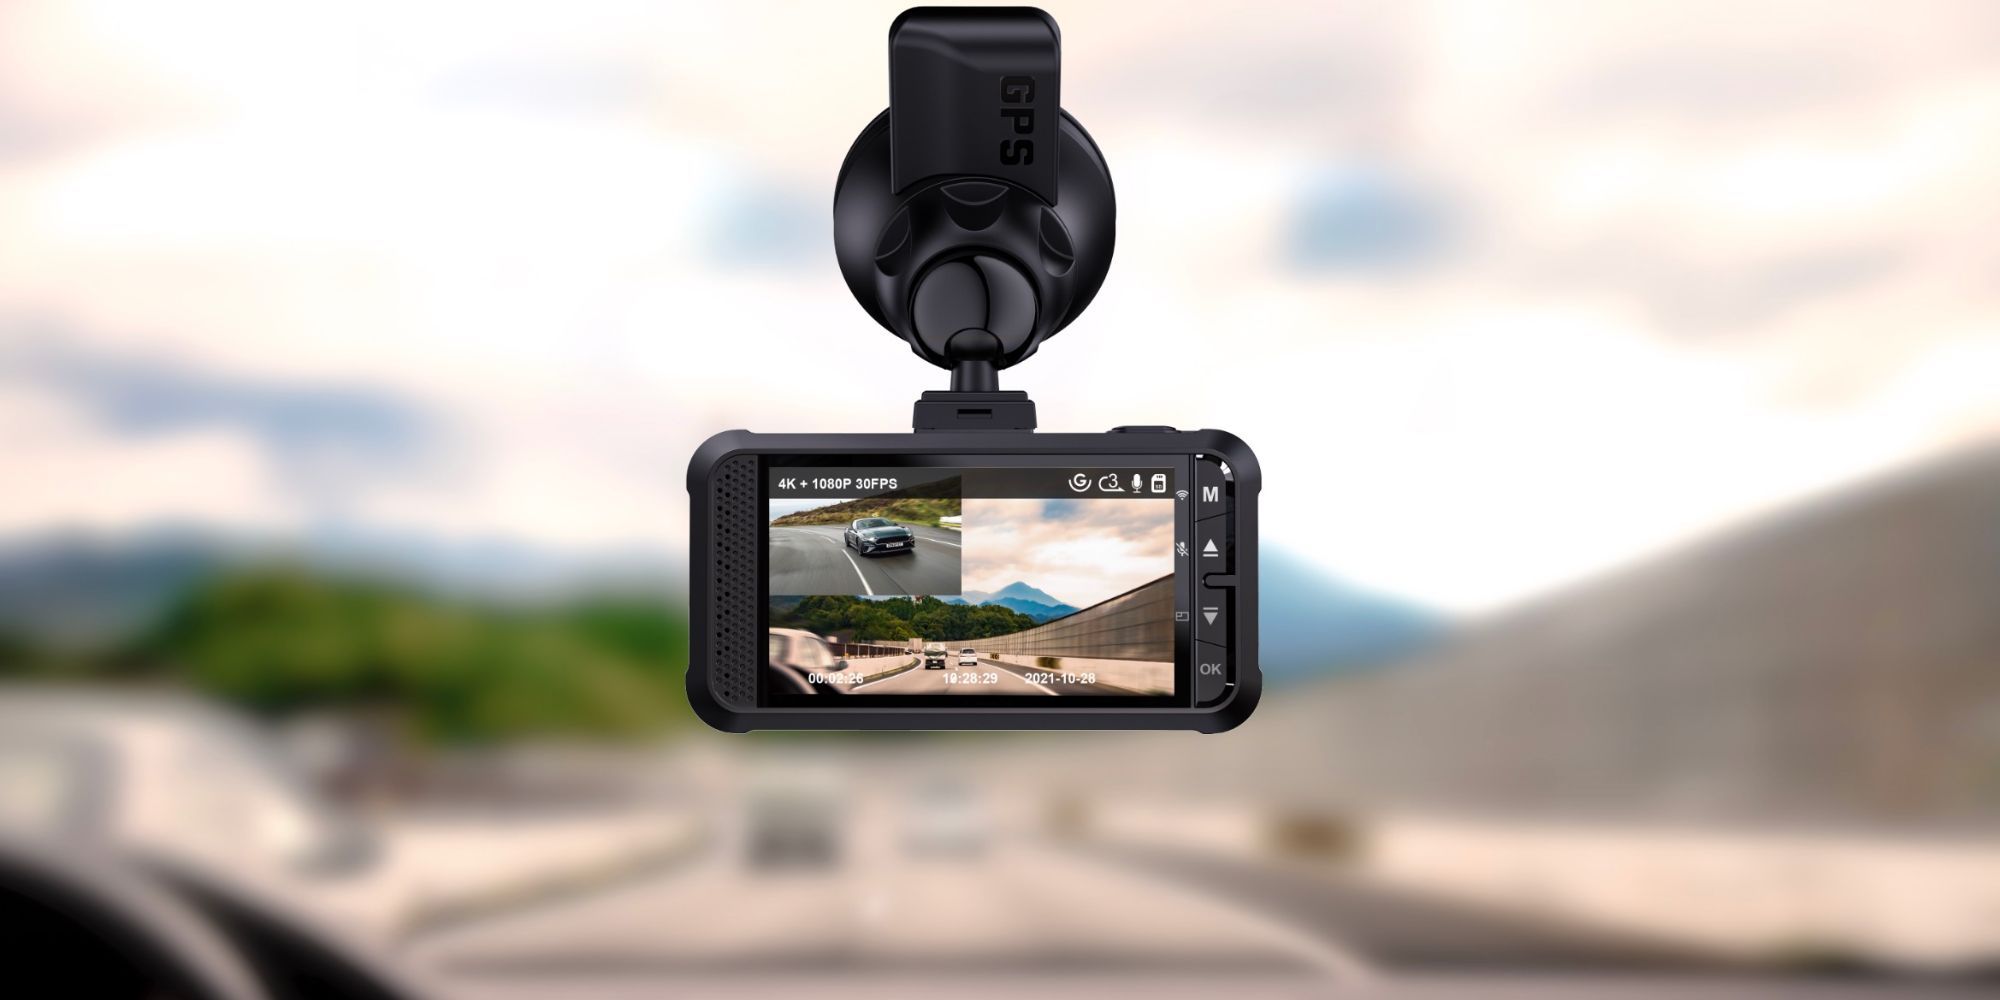 Vantrue E1 Lite 1080p WiFi Mini Dash Cam with GPS and Speed, Free App, Voice Control Front Car Dash Camera, 24 Hours Parking Mode, Night Vision, Motio